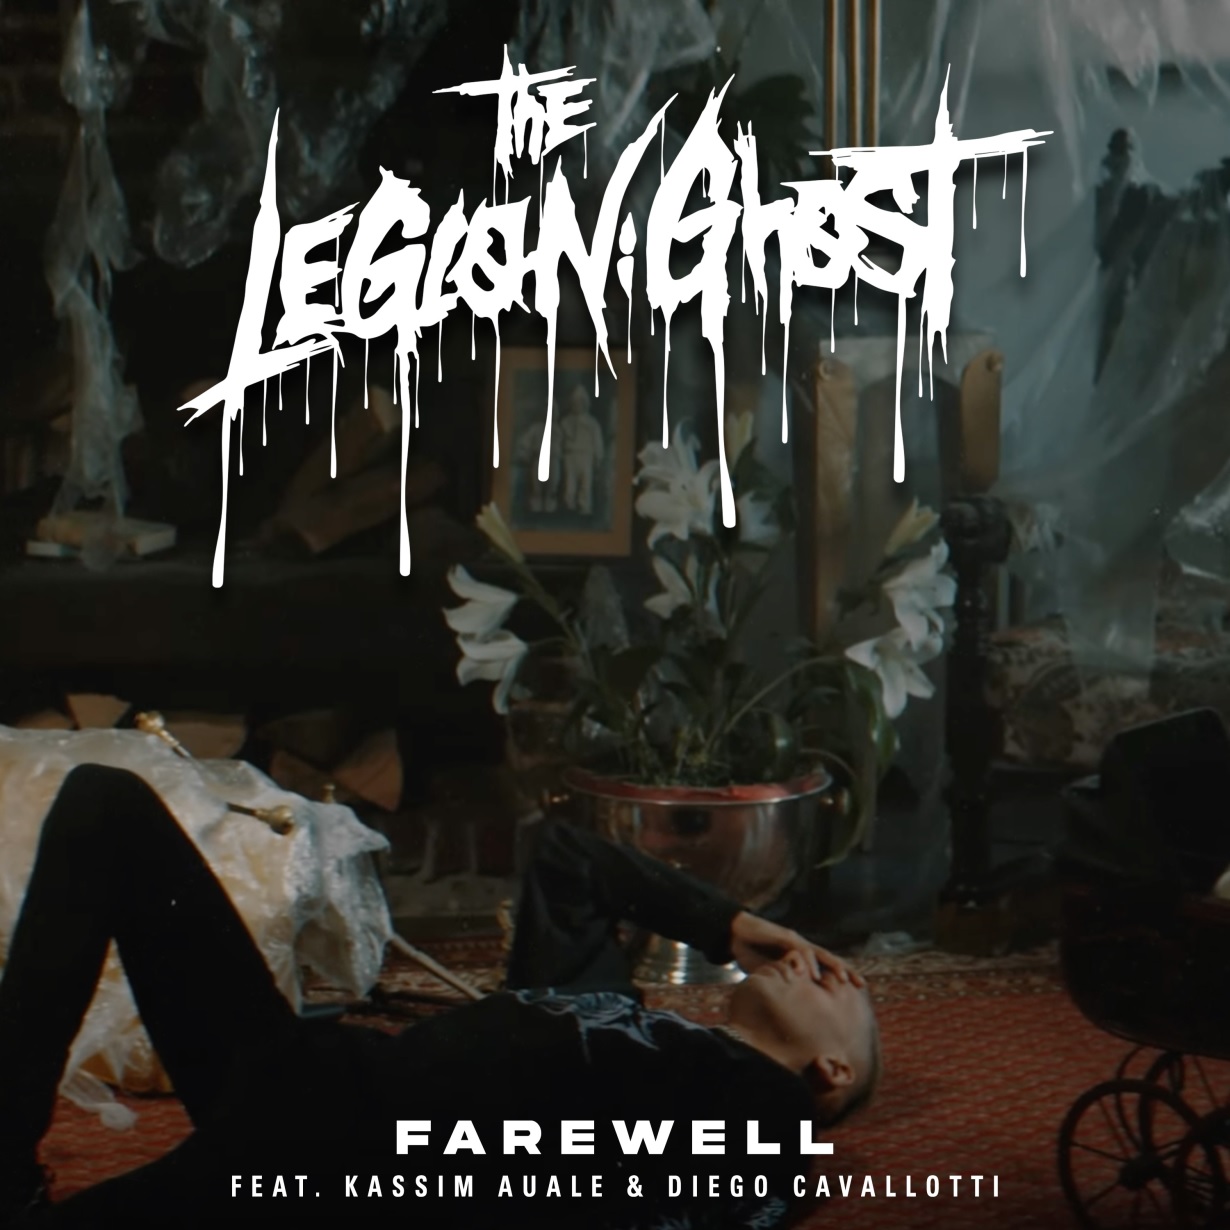 THE LEGION:GHOST - Farewell cover 